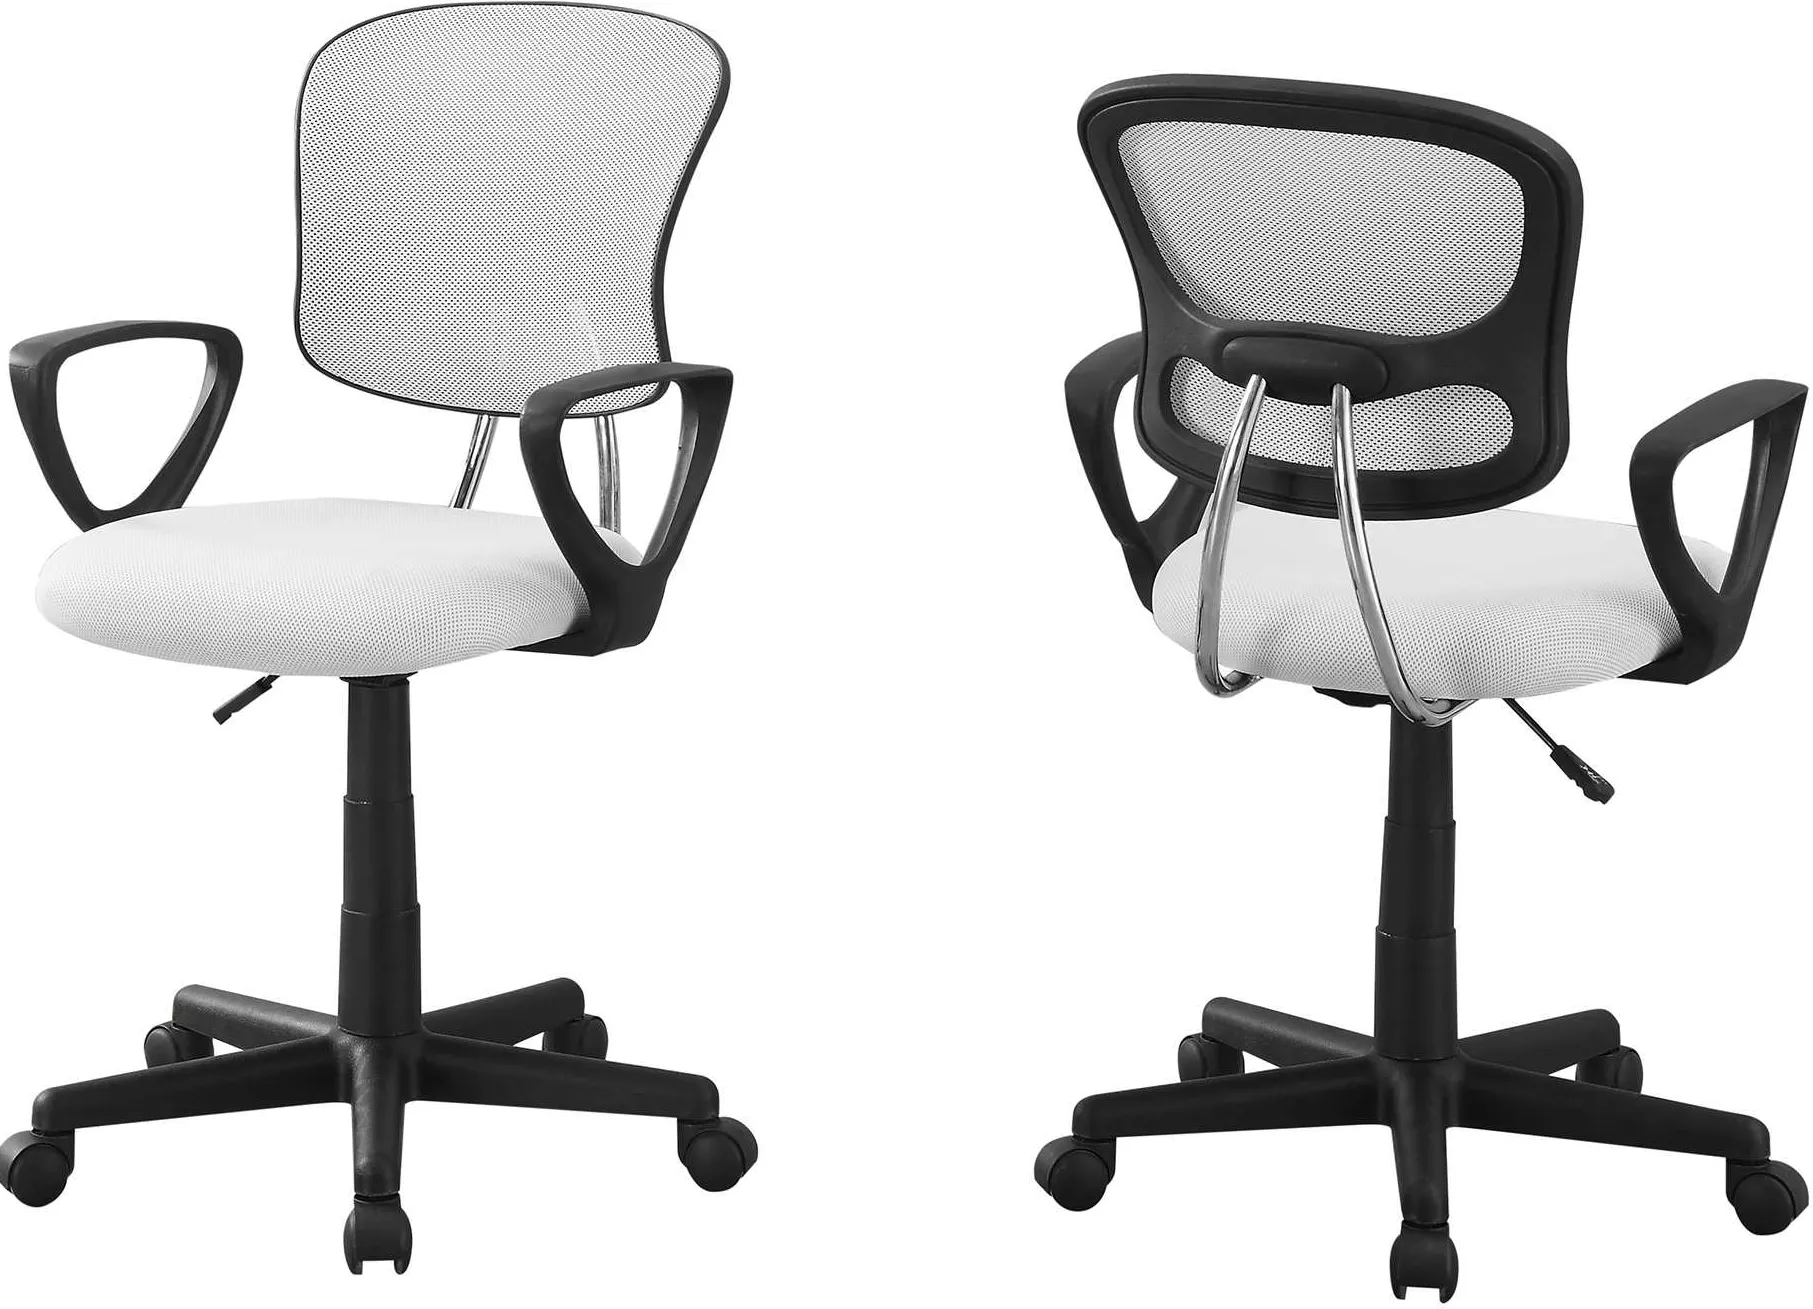 Office Chair, Adjustable Height, Swivel, Ergonomic, Armrests, Computer Desk, Work, Juvenile, Metal, Mesh, White, Black, Contemporary, Modern